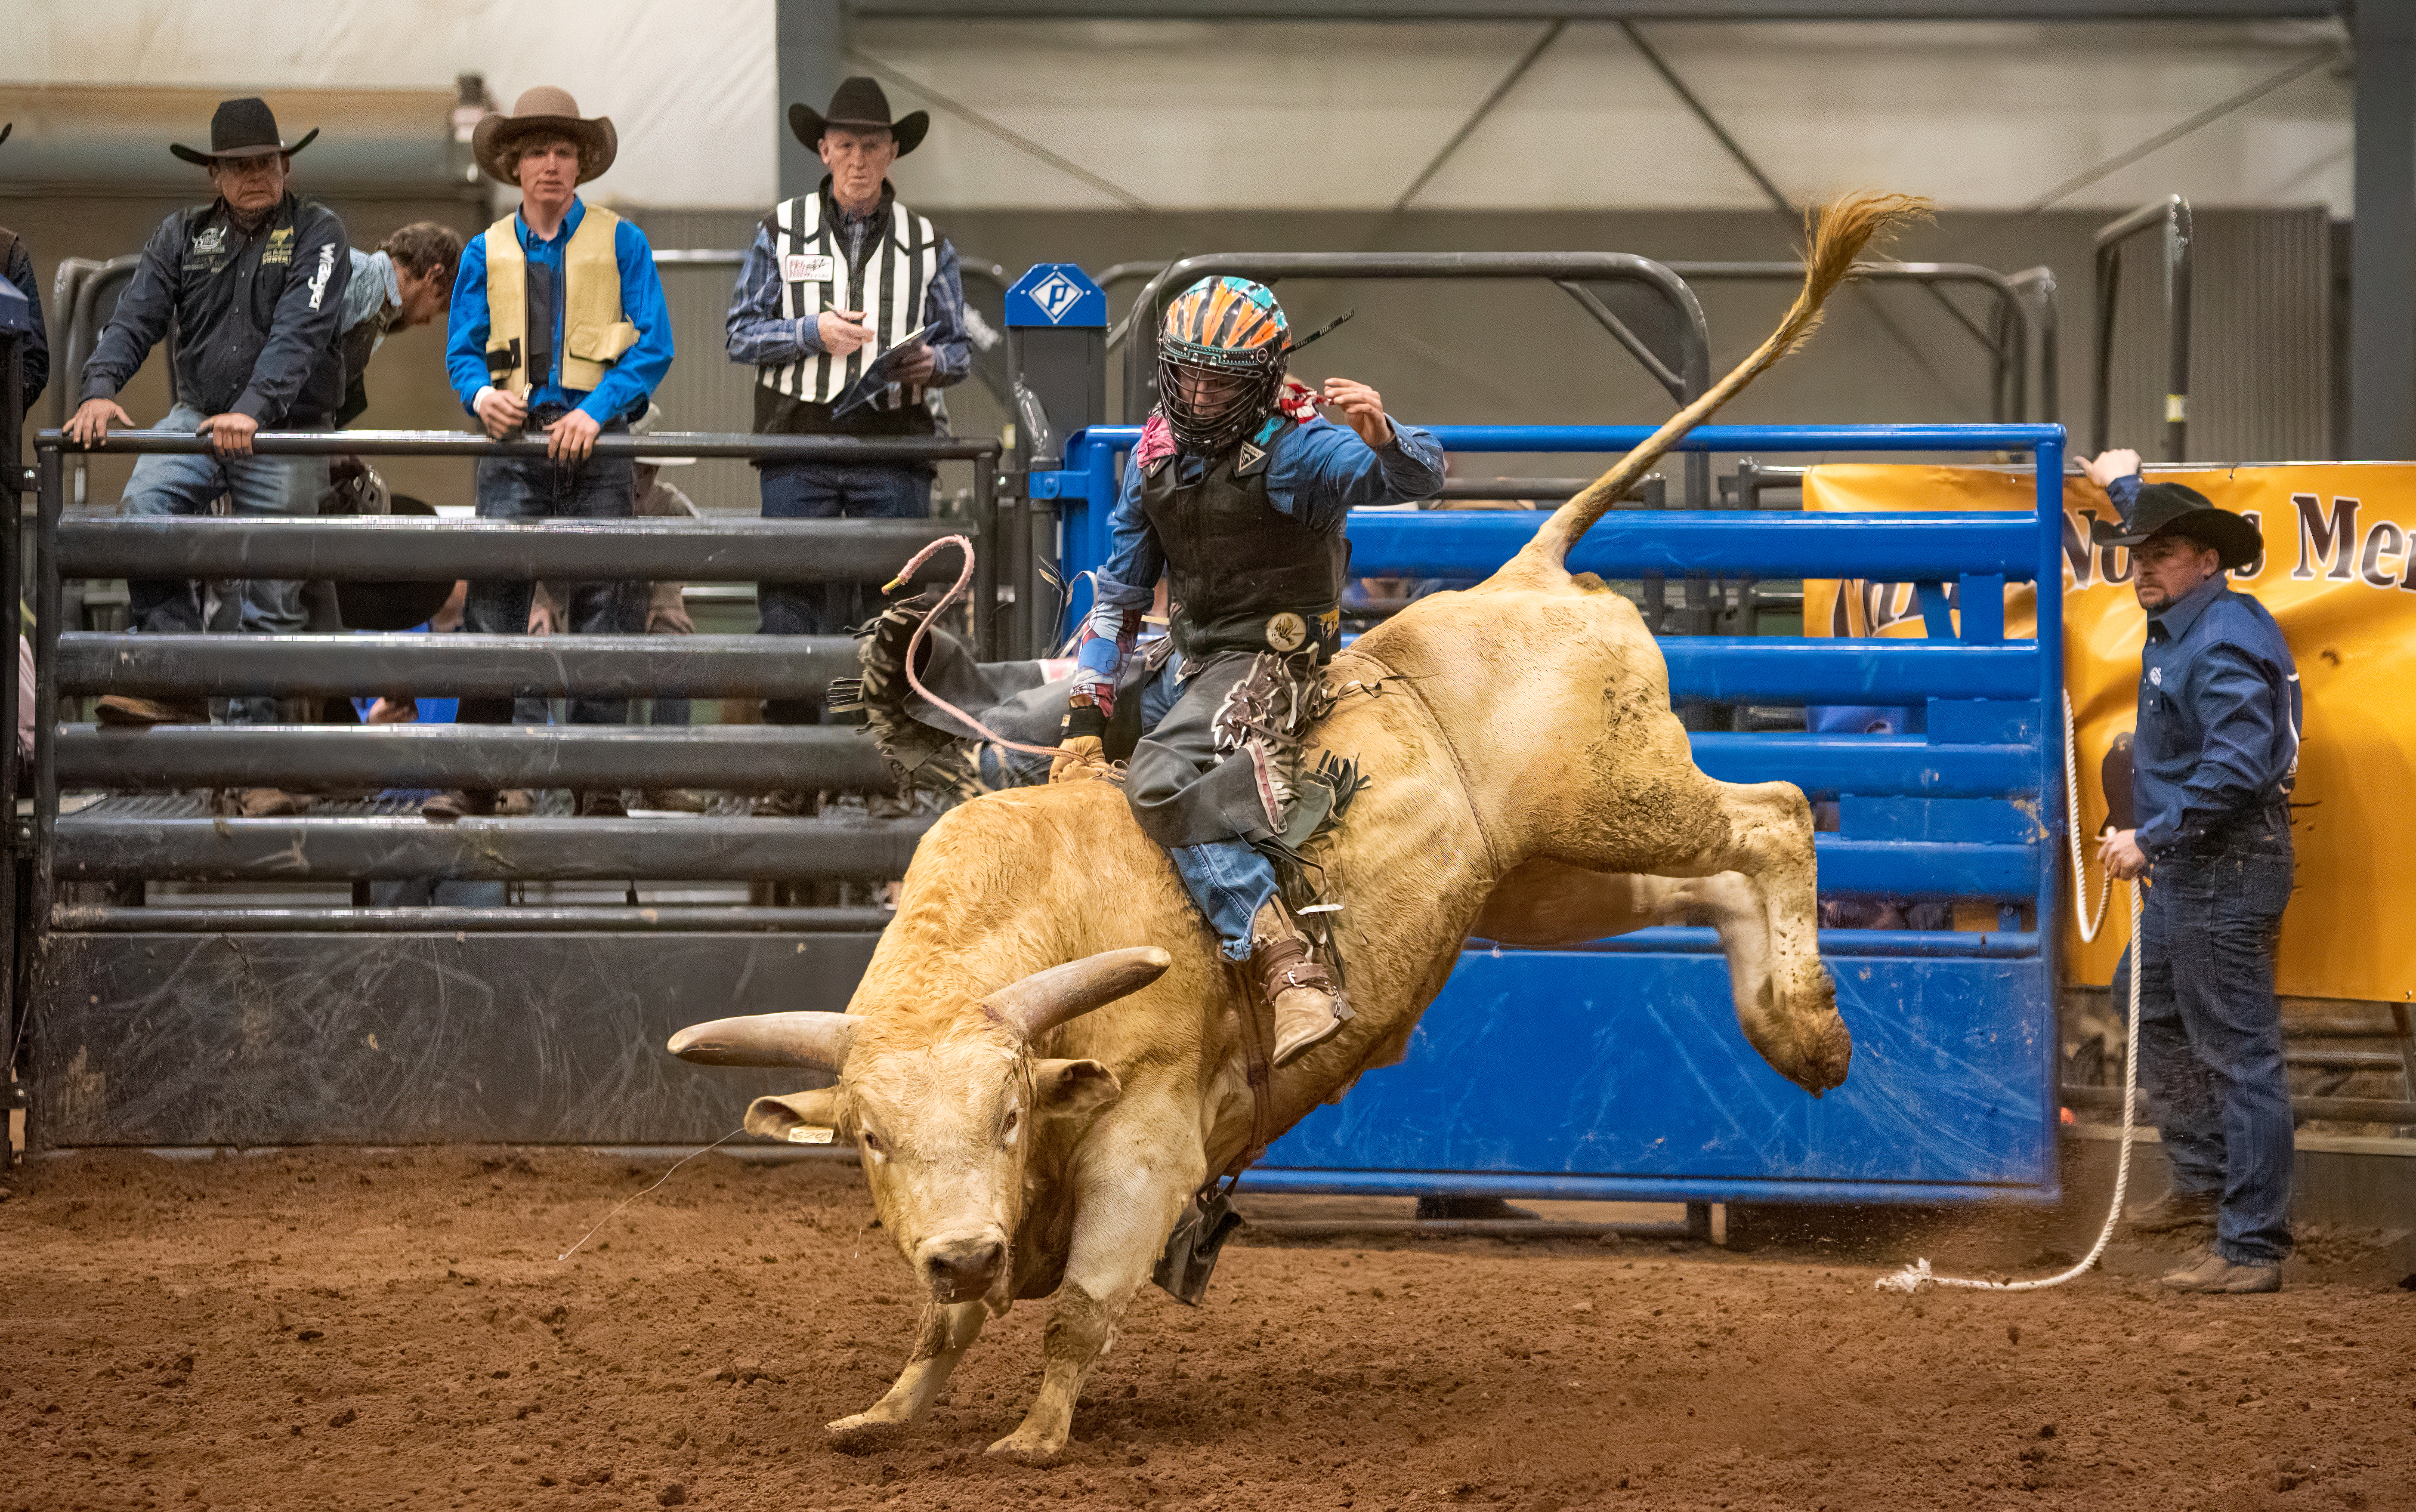 Buck It Bullriding rider on tan bull